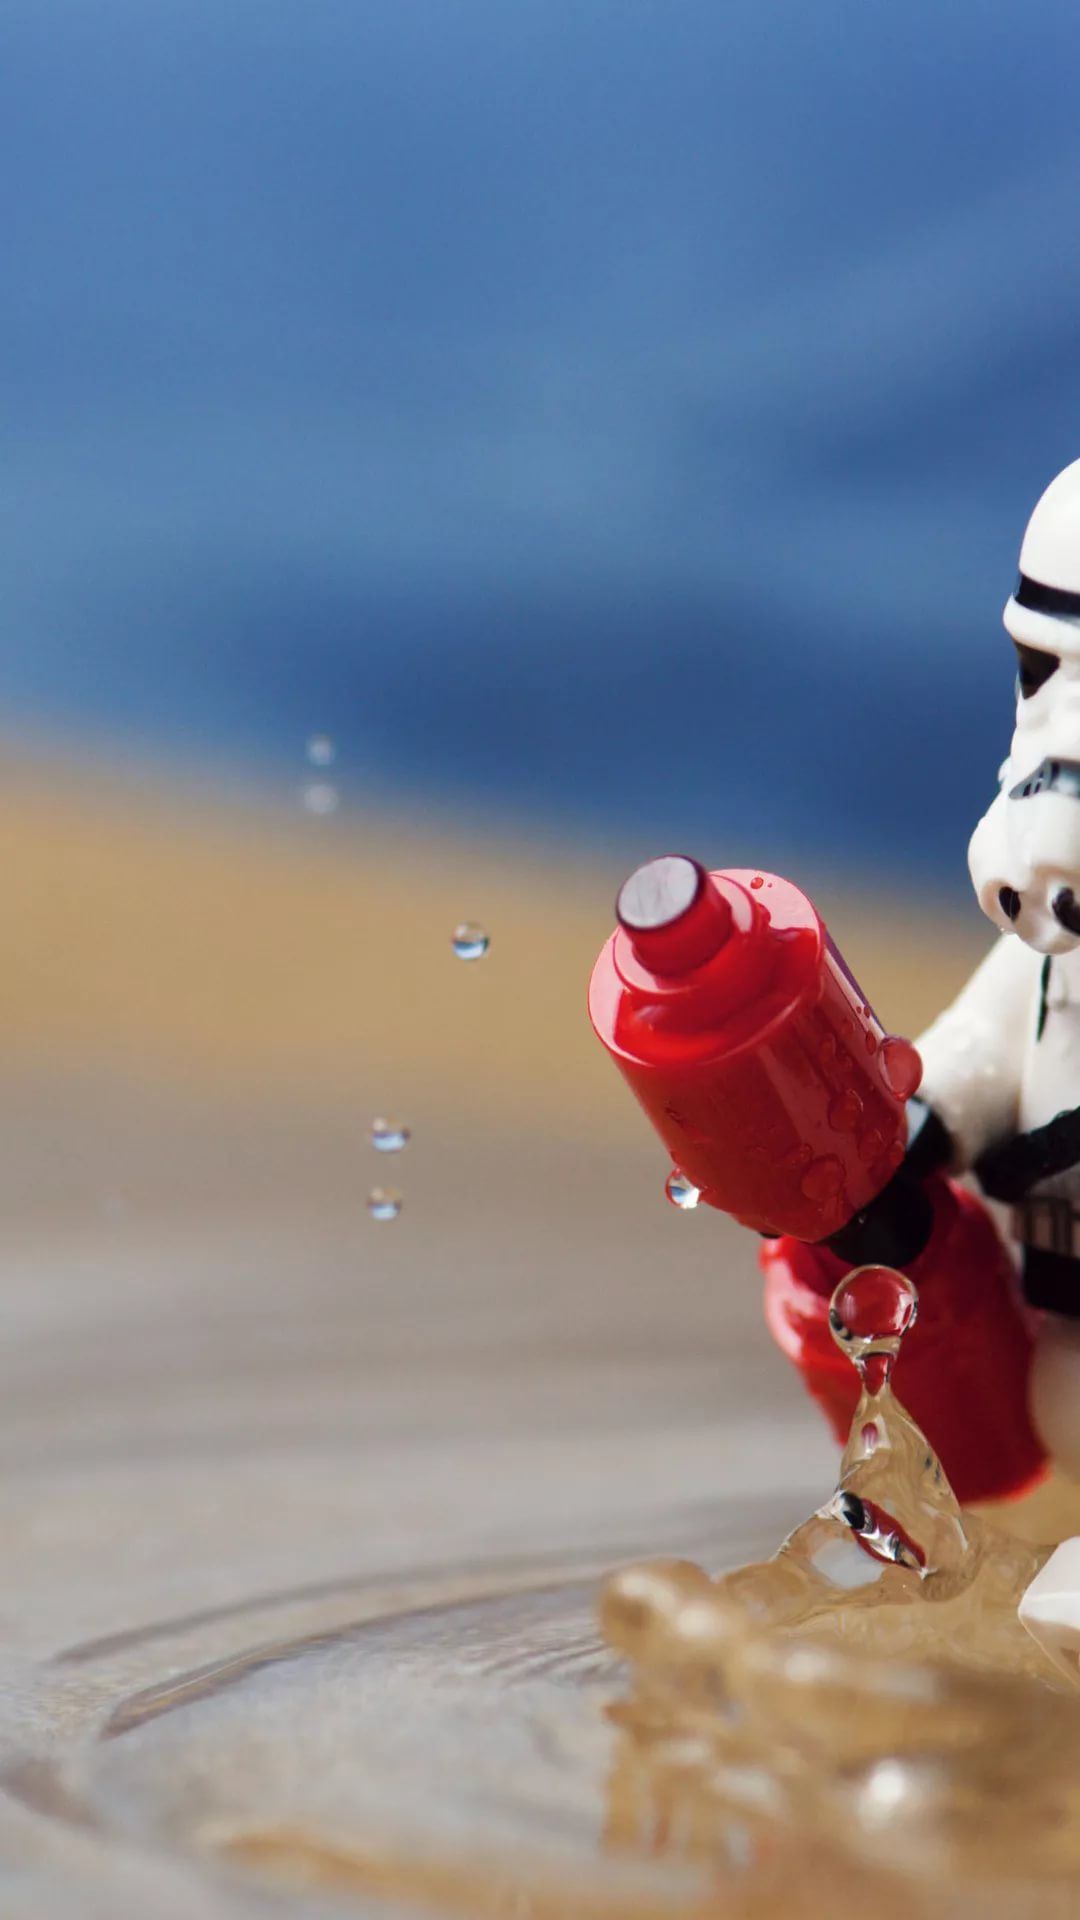 Lego Star Wars iPhone wallpaper